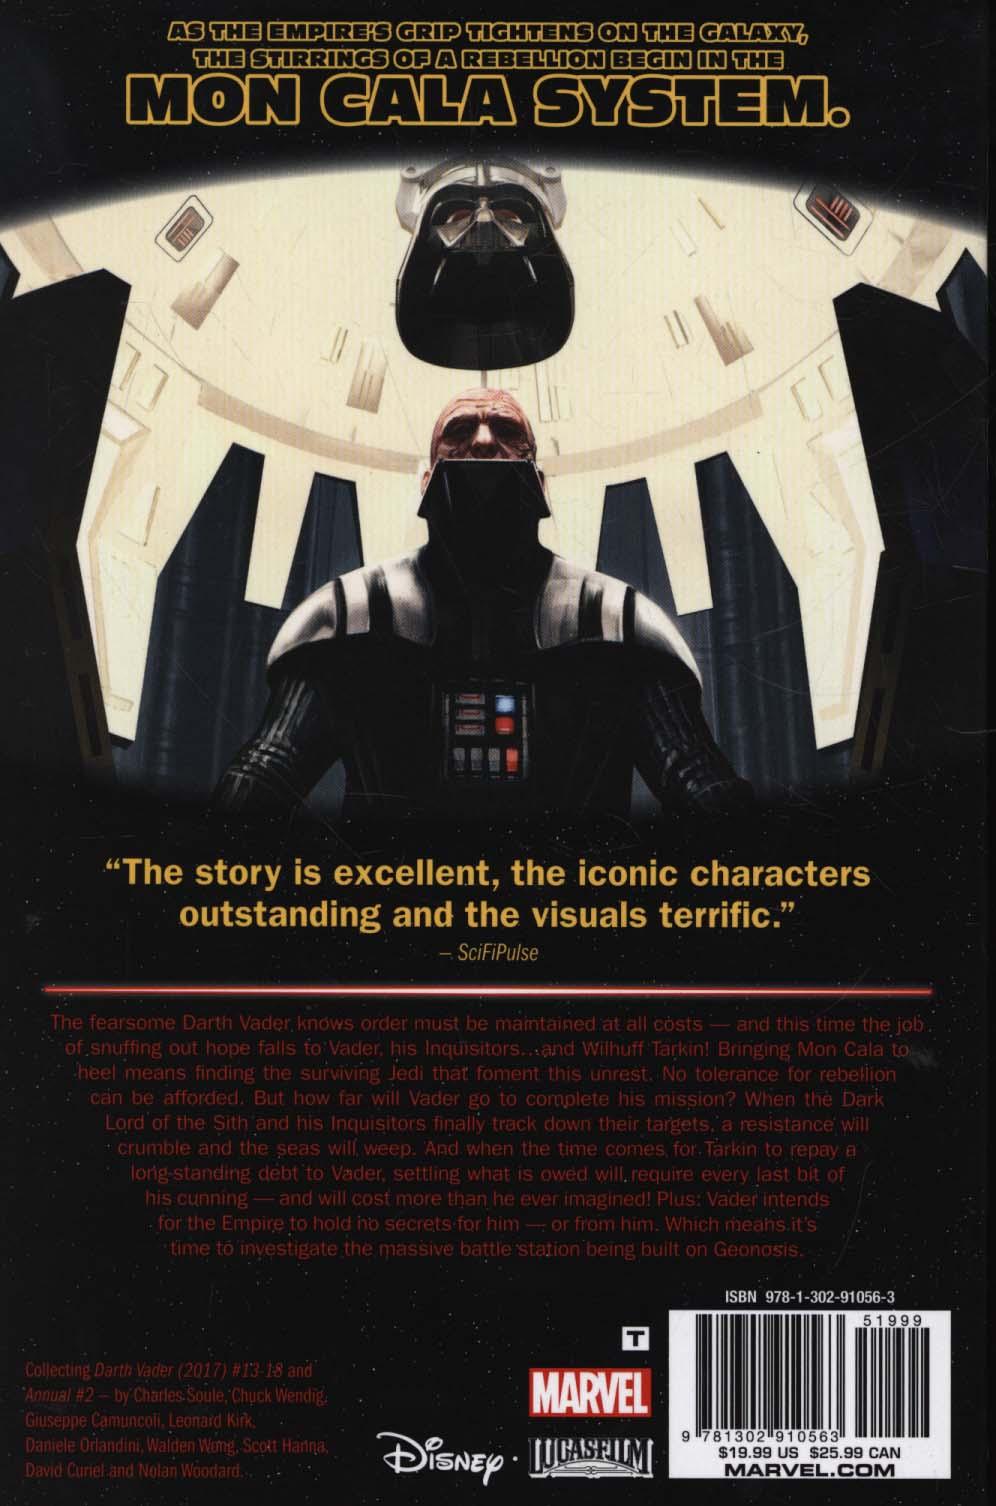 Star Wars: Darth Vader: Dark Lord Of The Sith Vol. 3 - The B